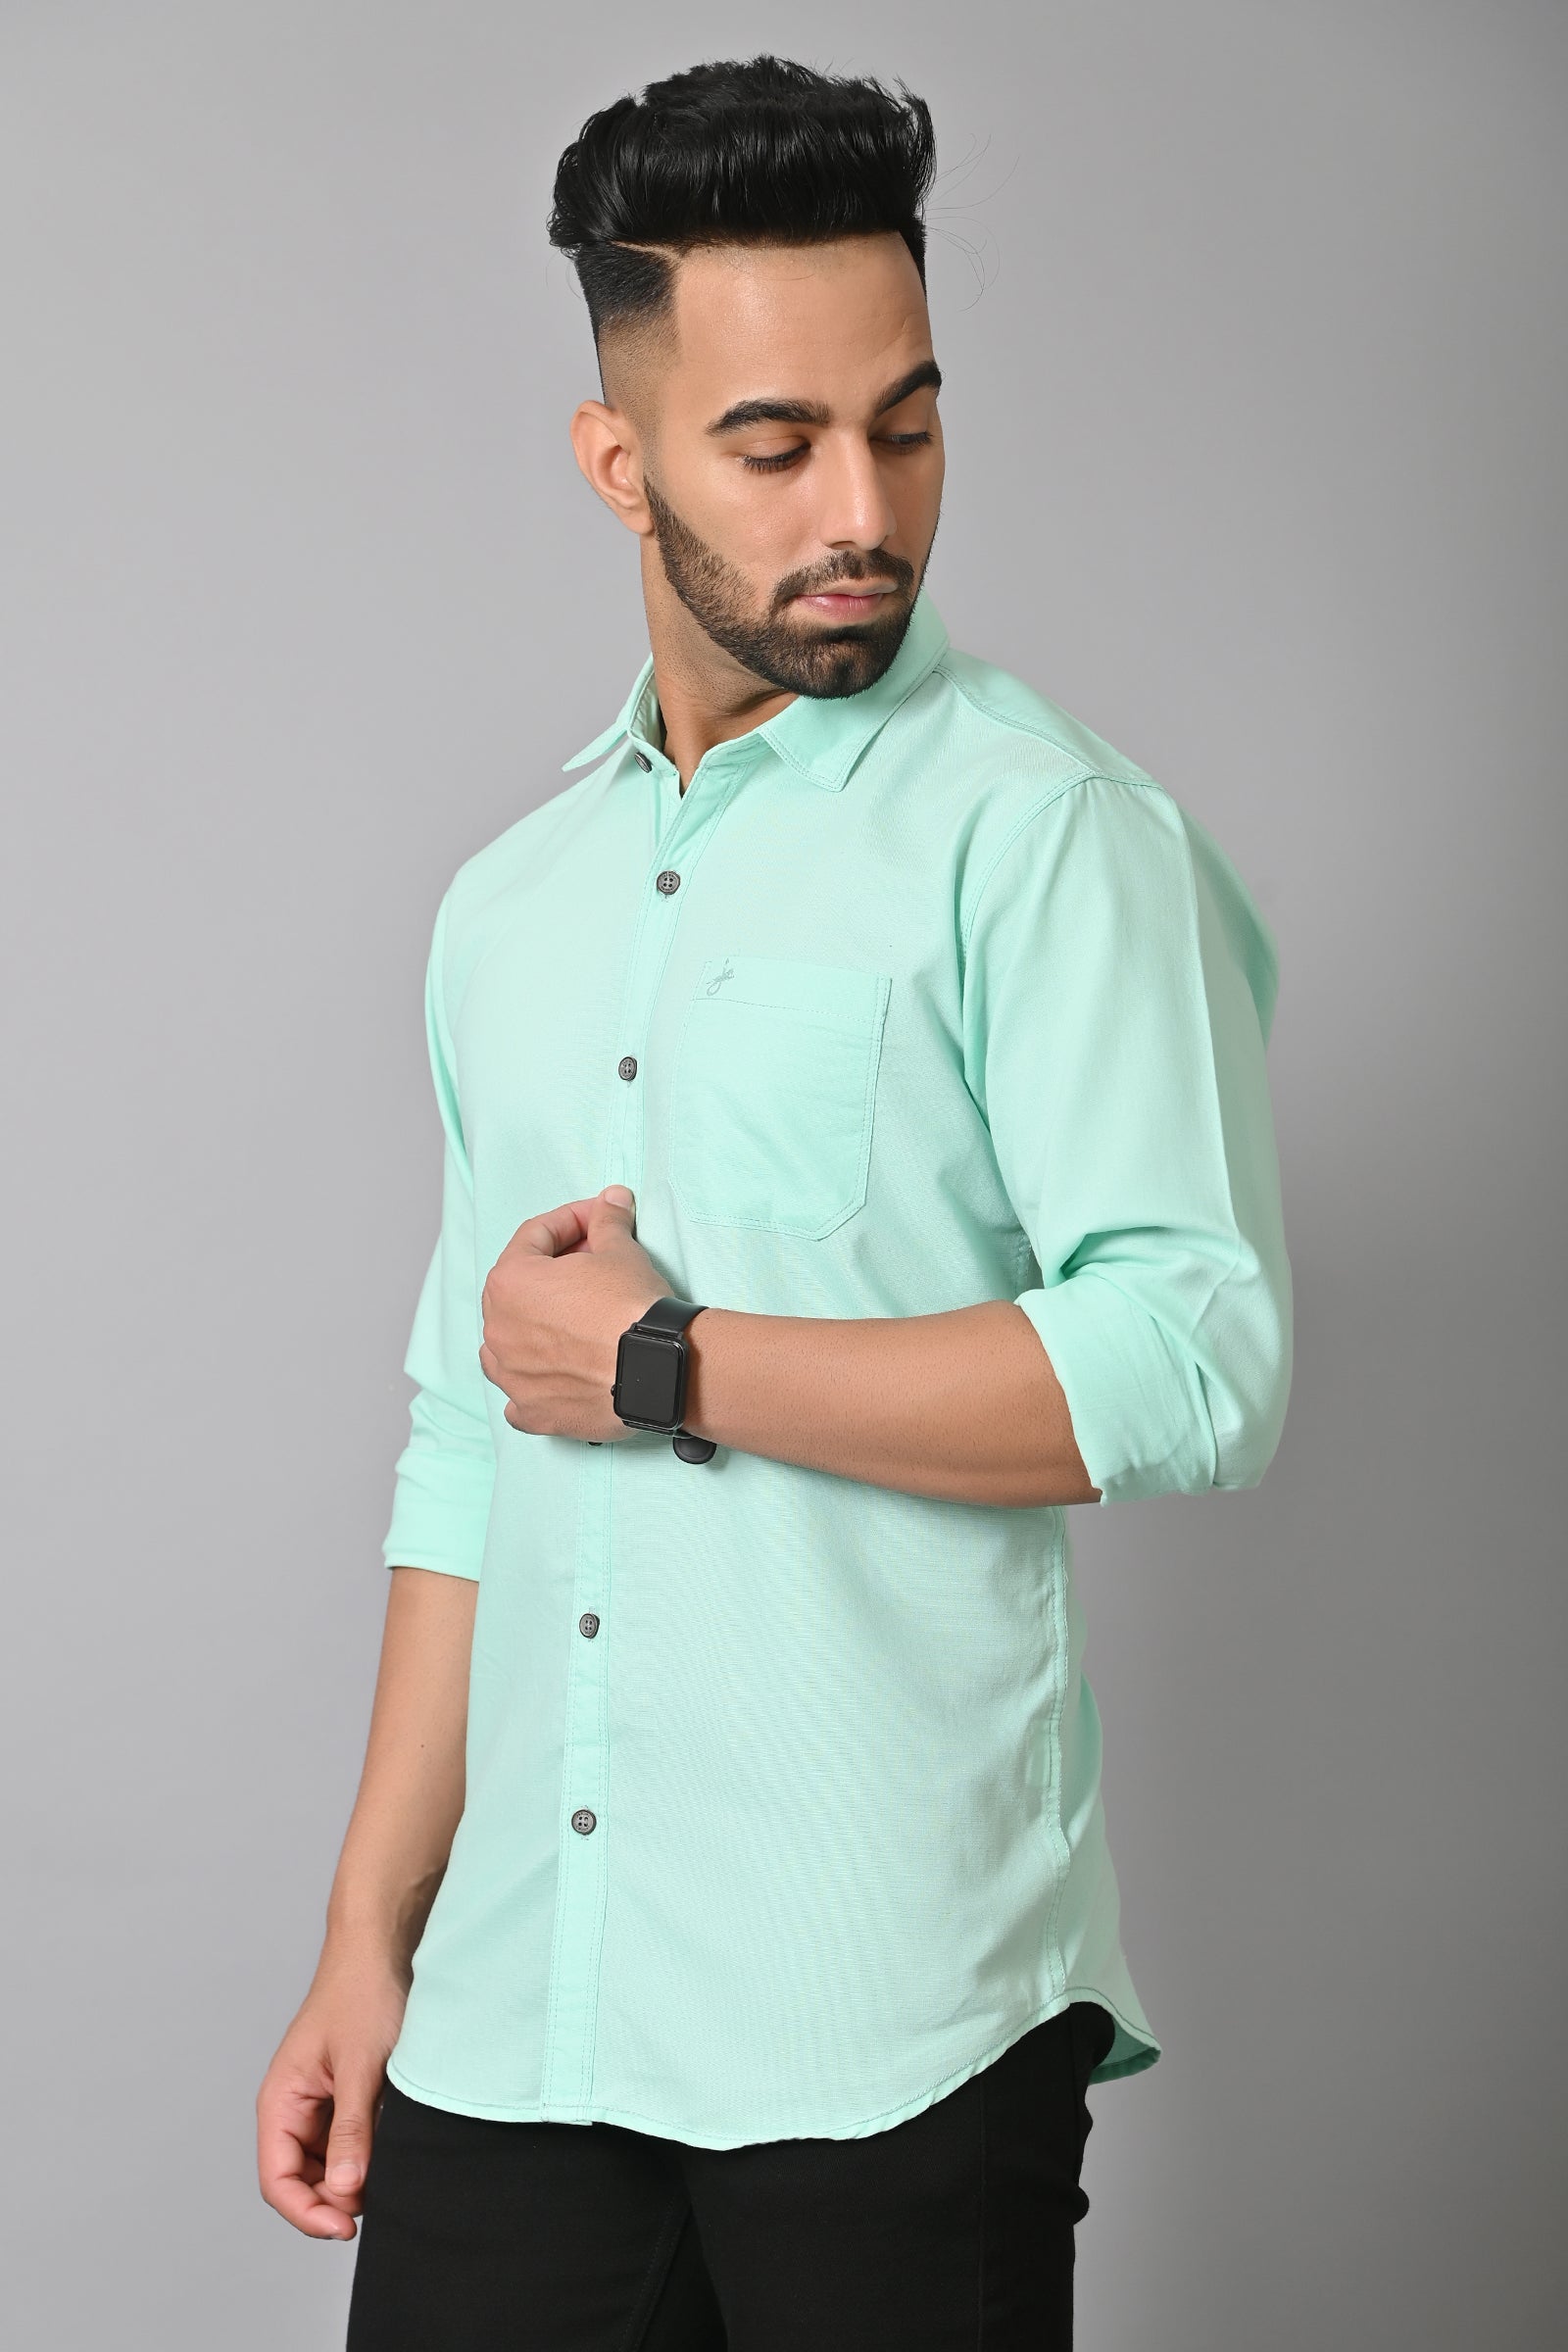 Jaguro Men's Casual Solid Shirt Turquoise